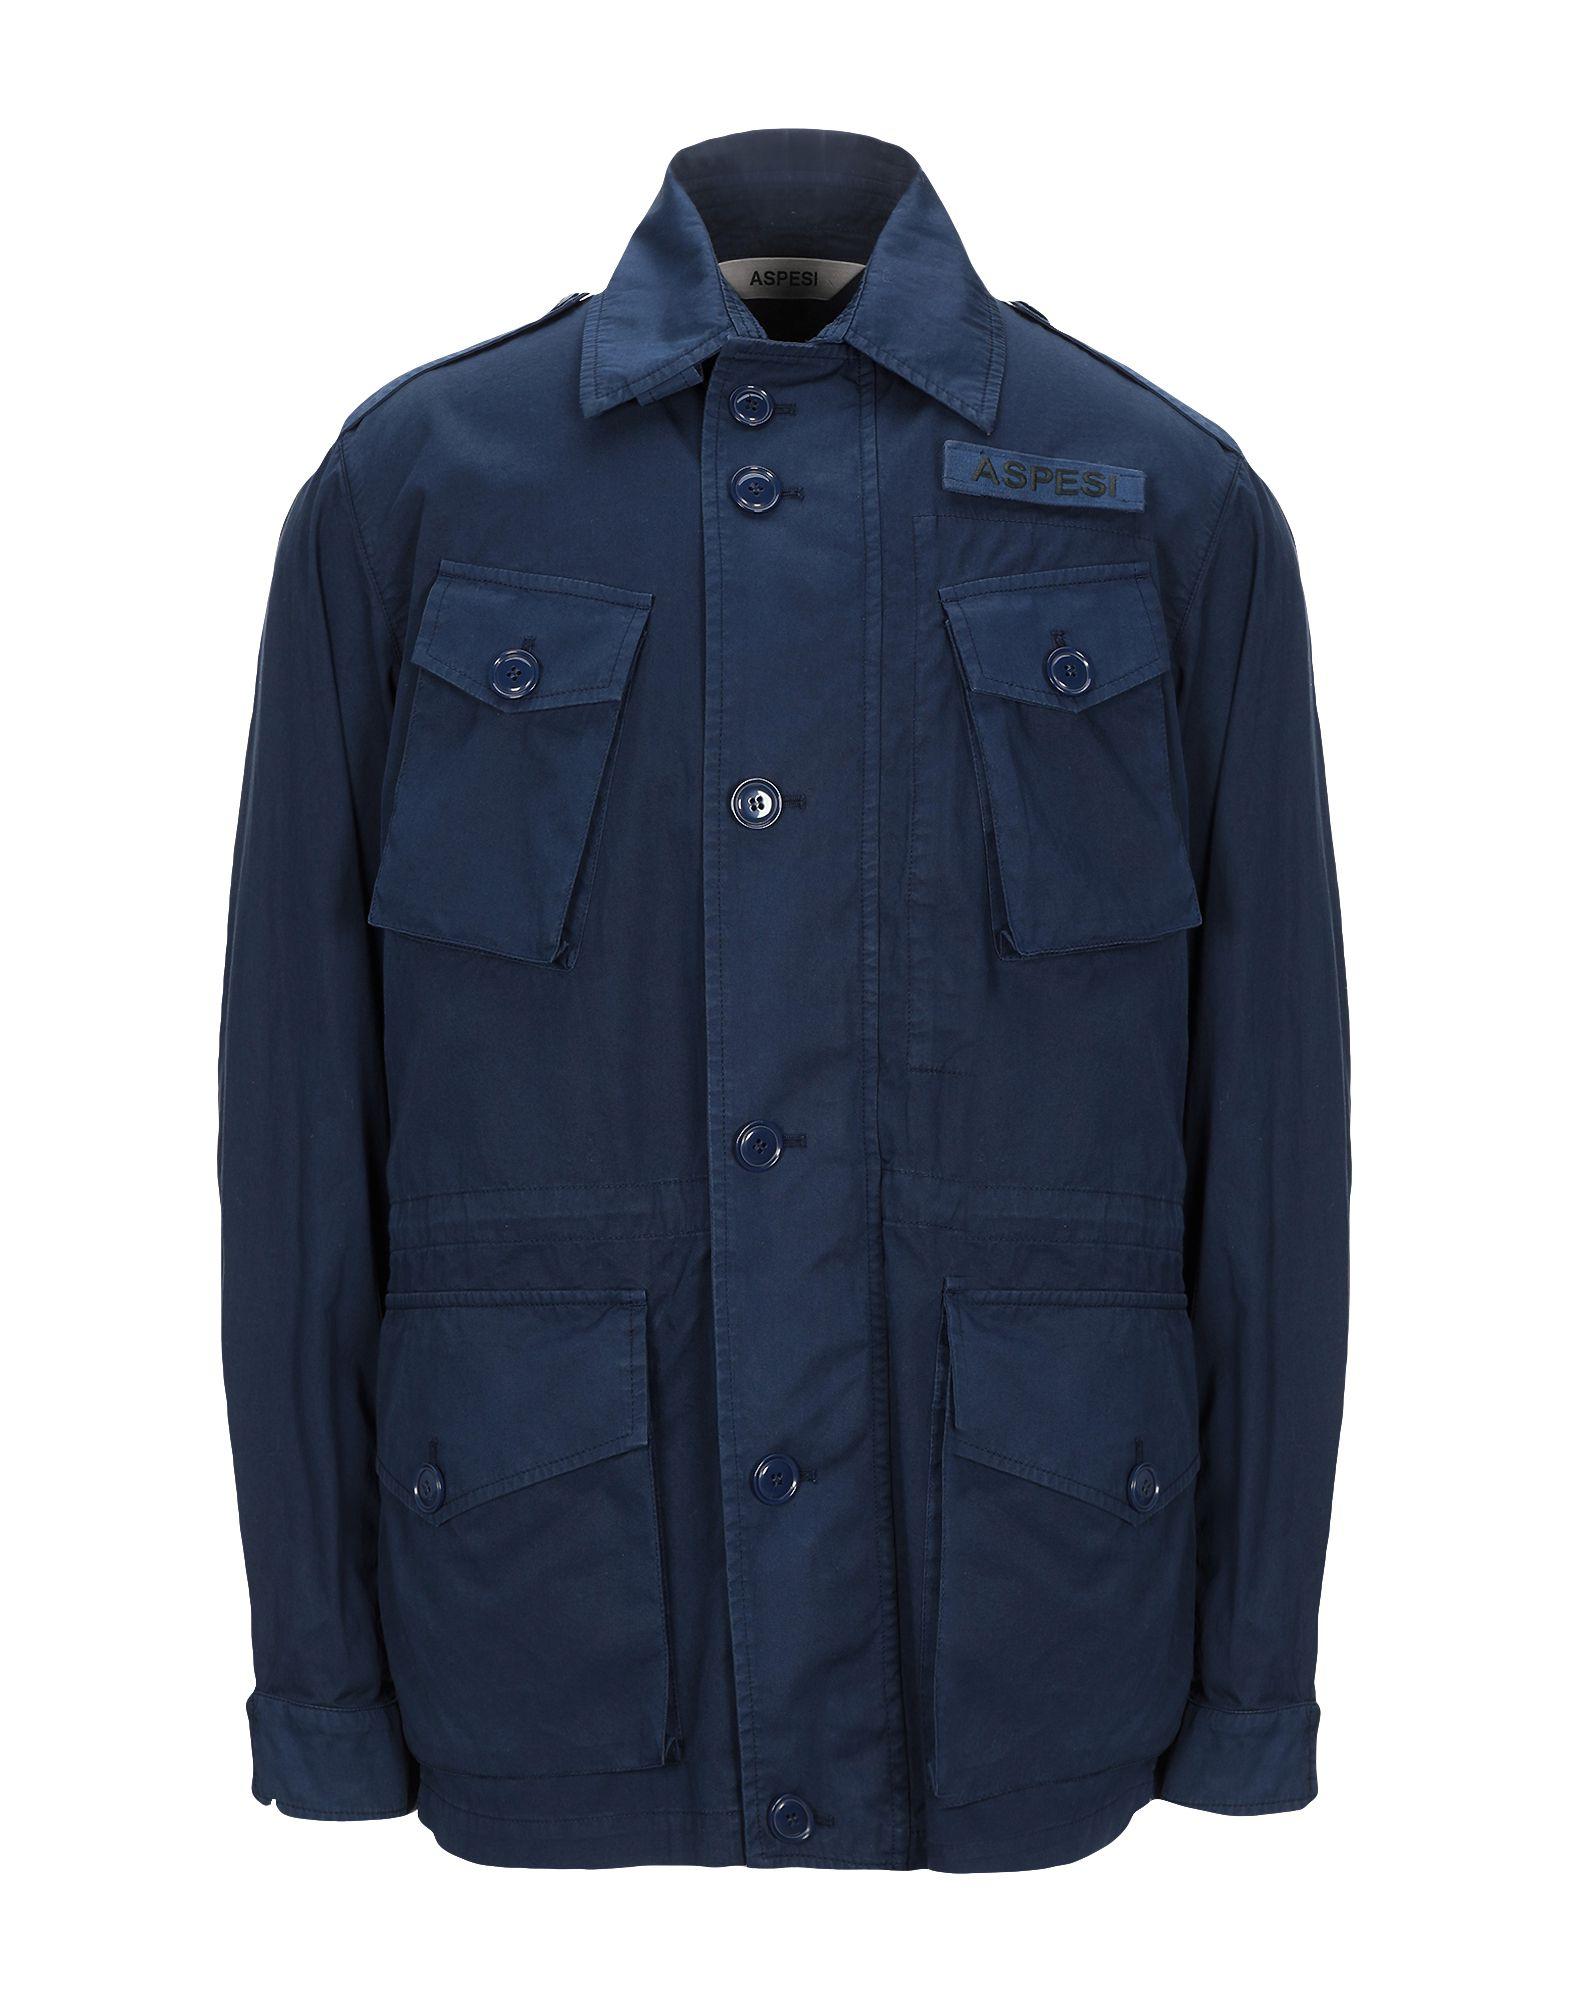 Aspesi Cotton Jacket in Dark Blue (Blue) for Men - Lyst